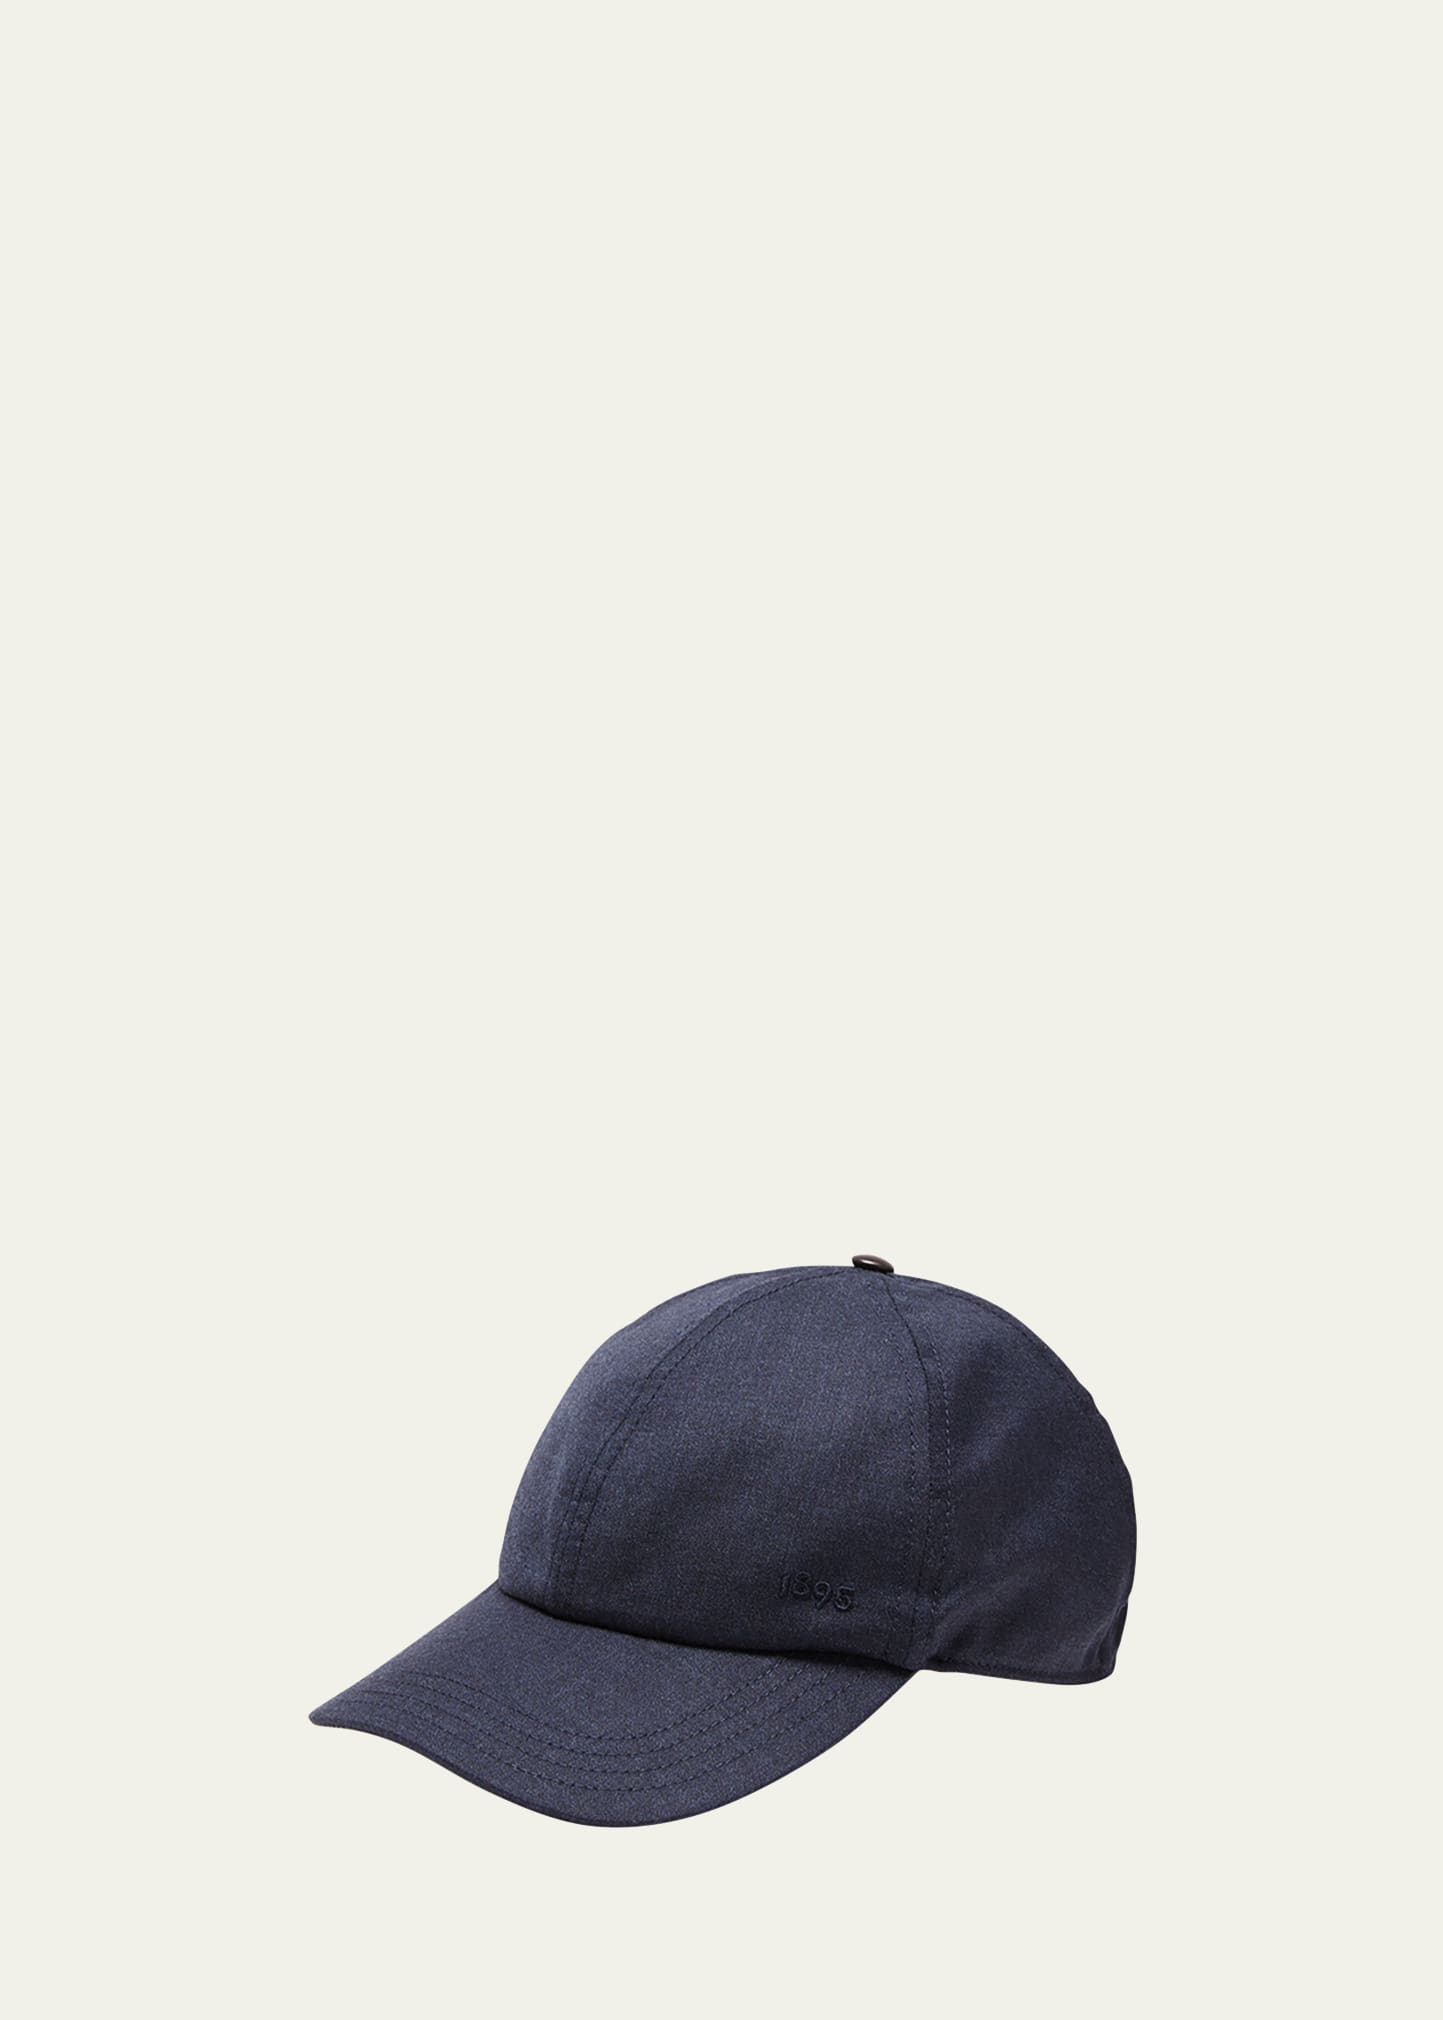 Men's 6-Panel Wool Baseball Hat